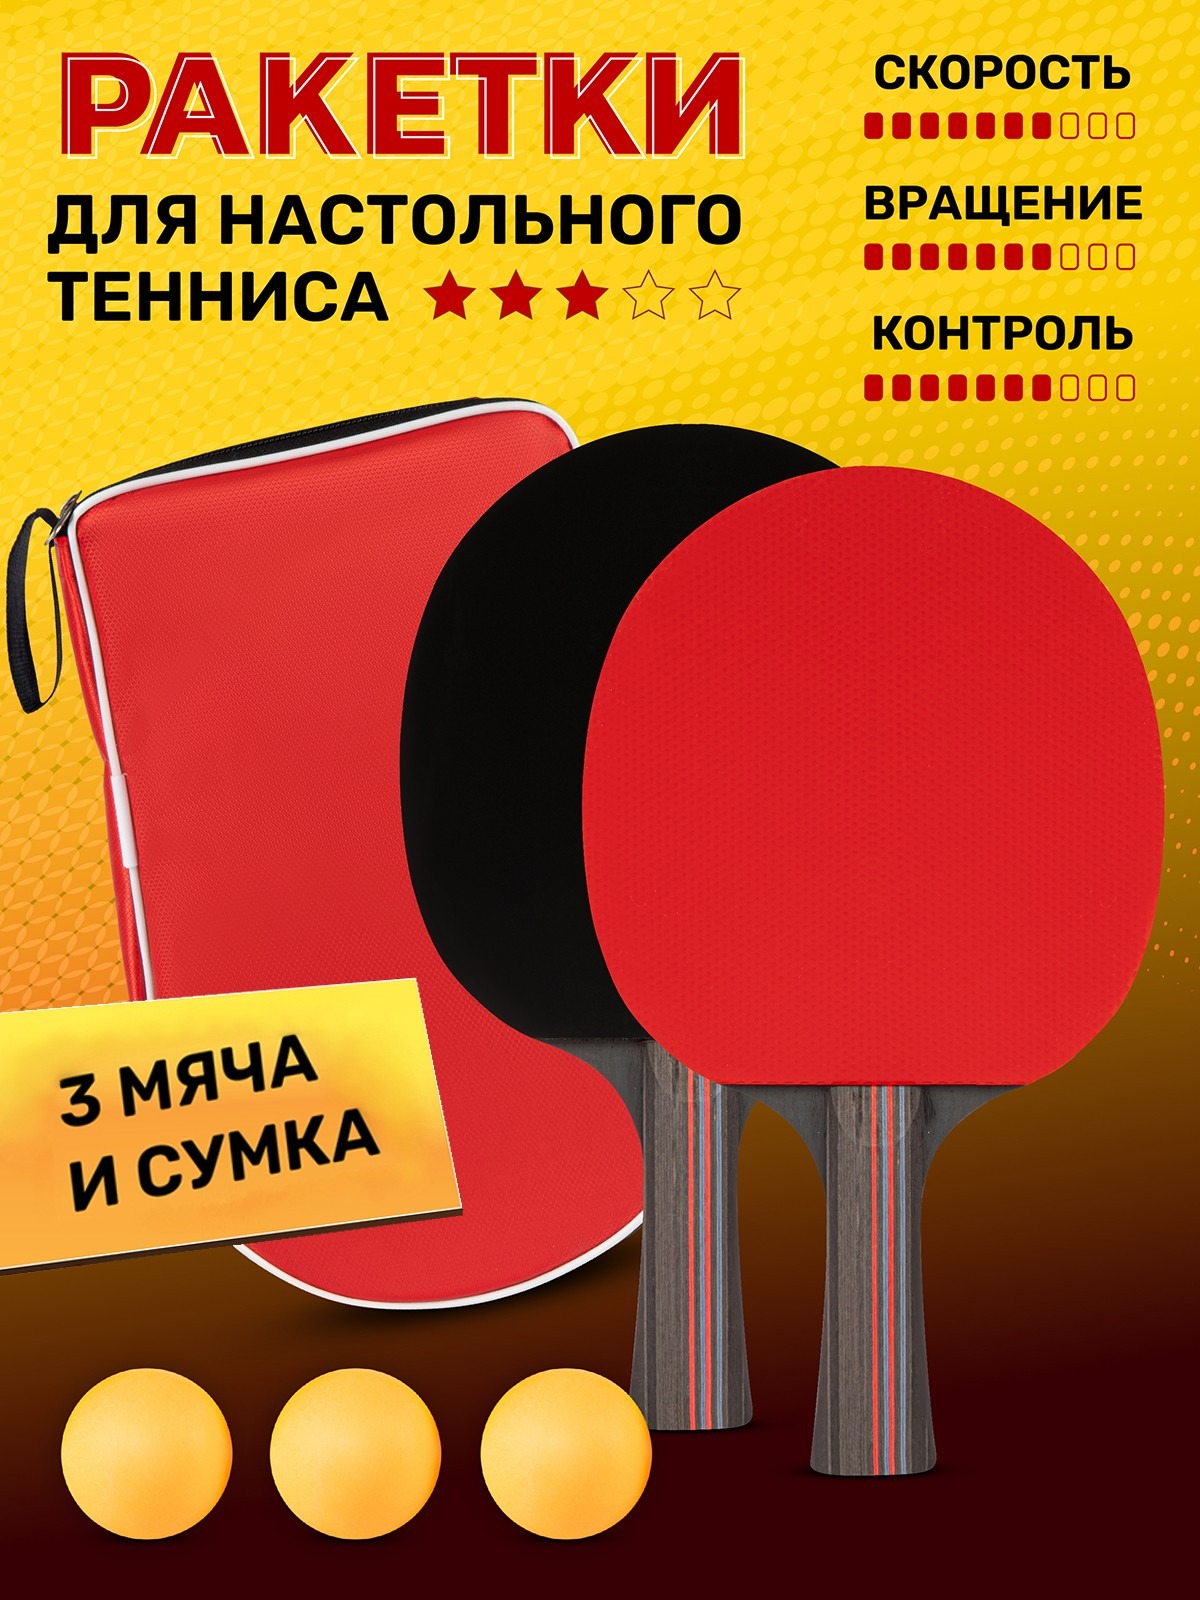 Набор для настольного тенниса ТМ CR, ракетки 5*, 3 шарика, в сумке, JB1000470